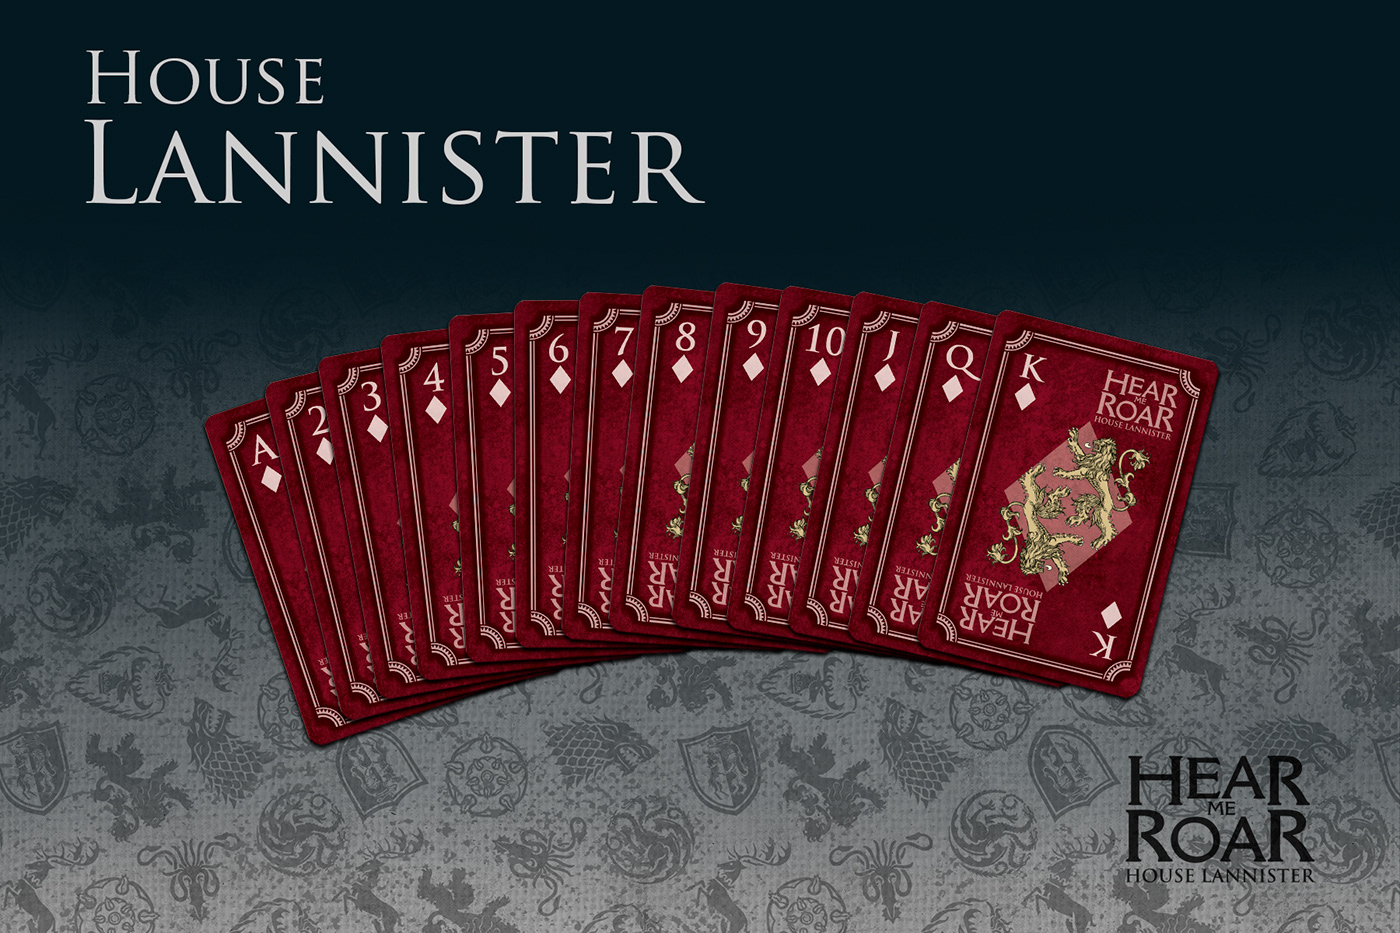 Game of Thrones juego de tronos Poker juego de mesa board game